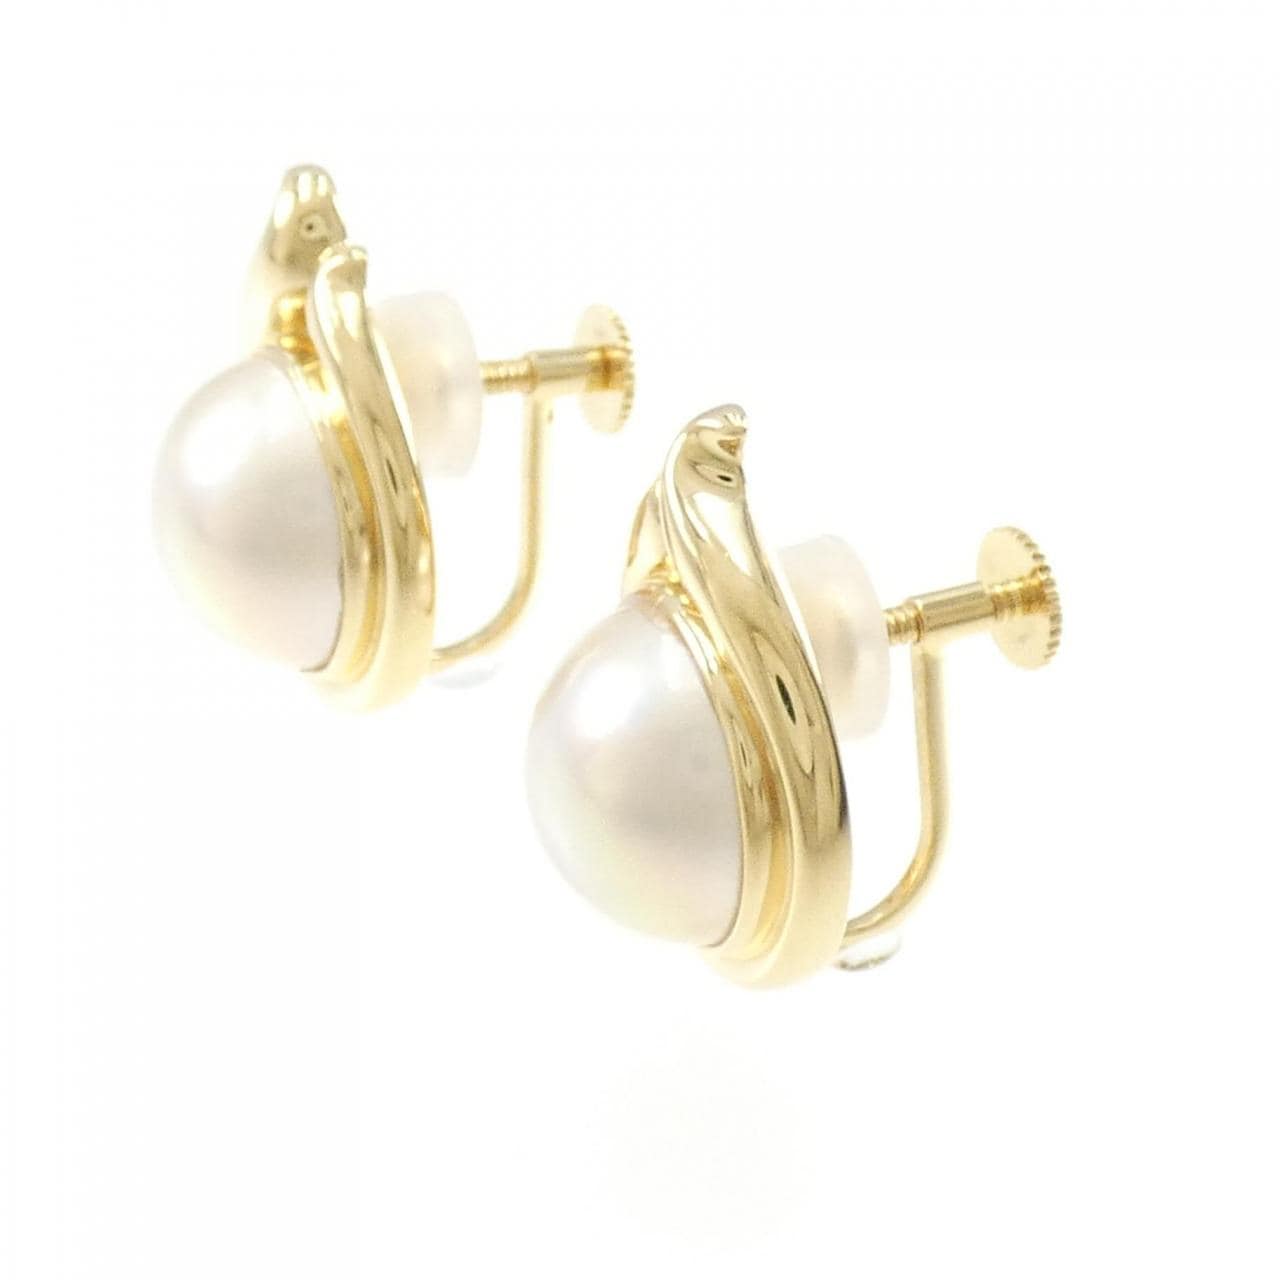 Paula mabe pearl earrings